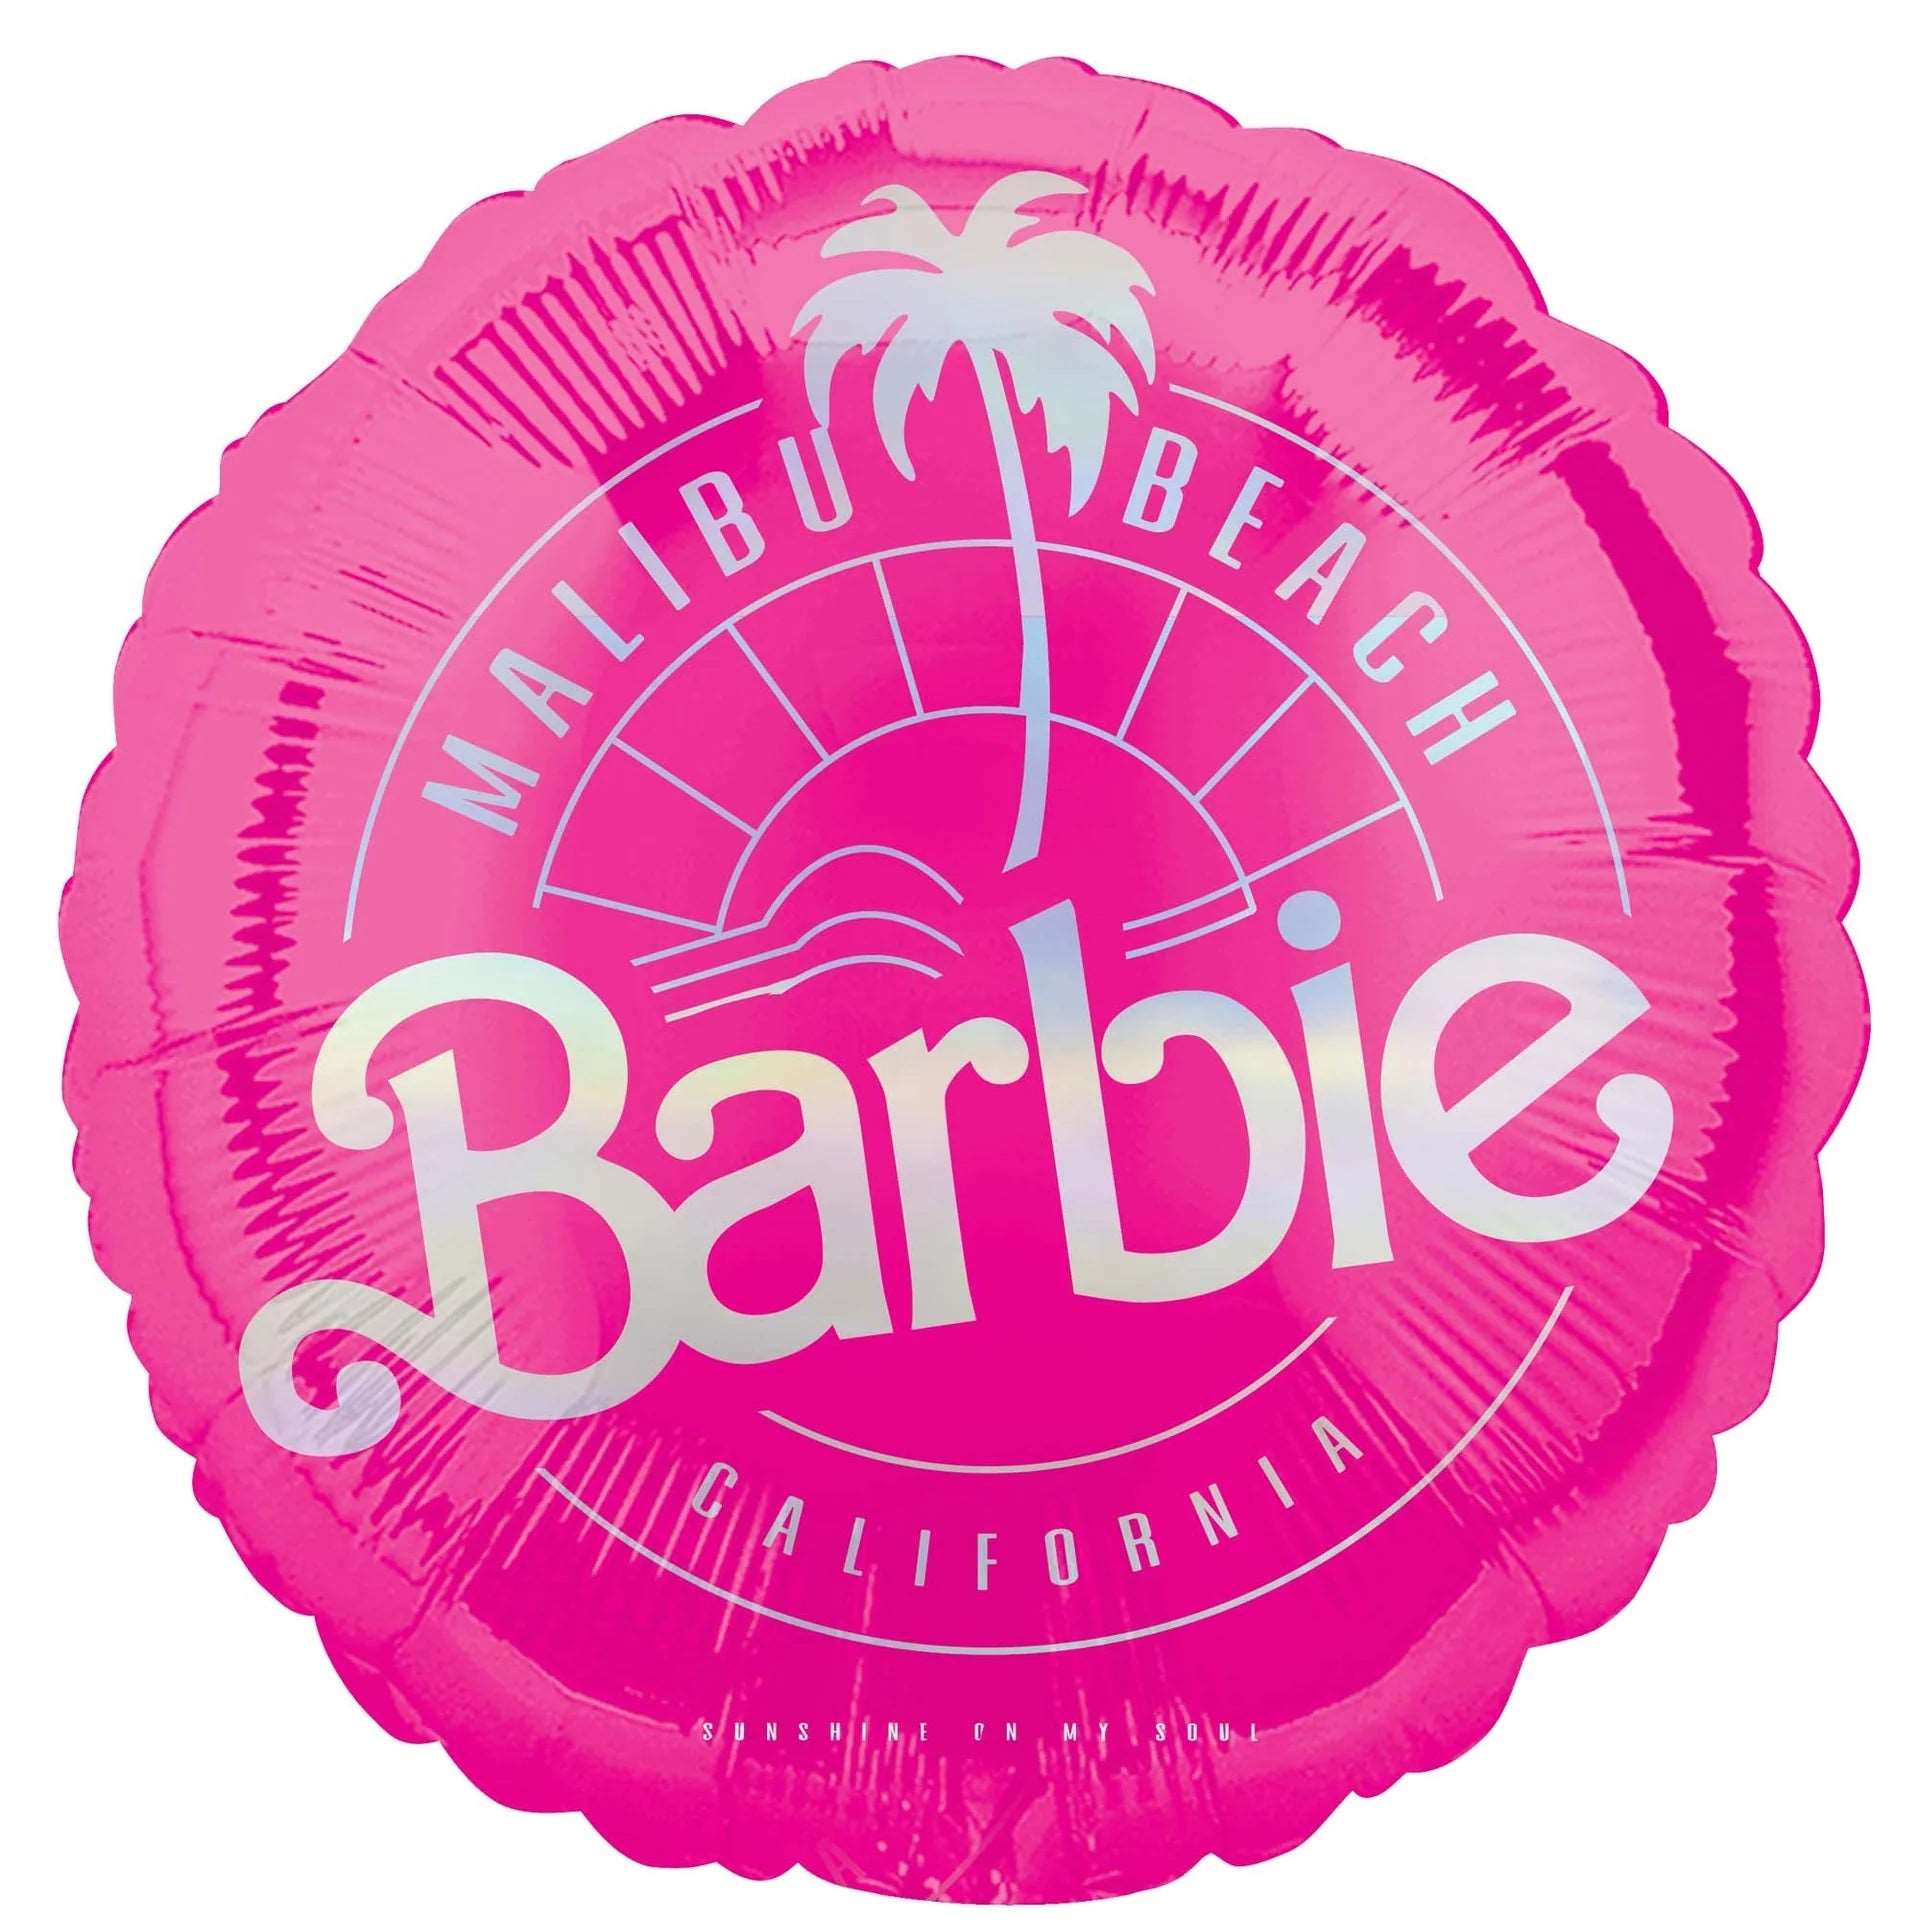 Barbie Malibu Beach 18 inch Foil Balloon Sold: Single Approx. size: 43cm / 18 in